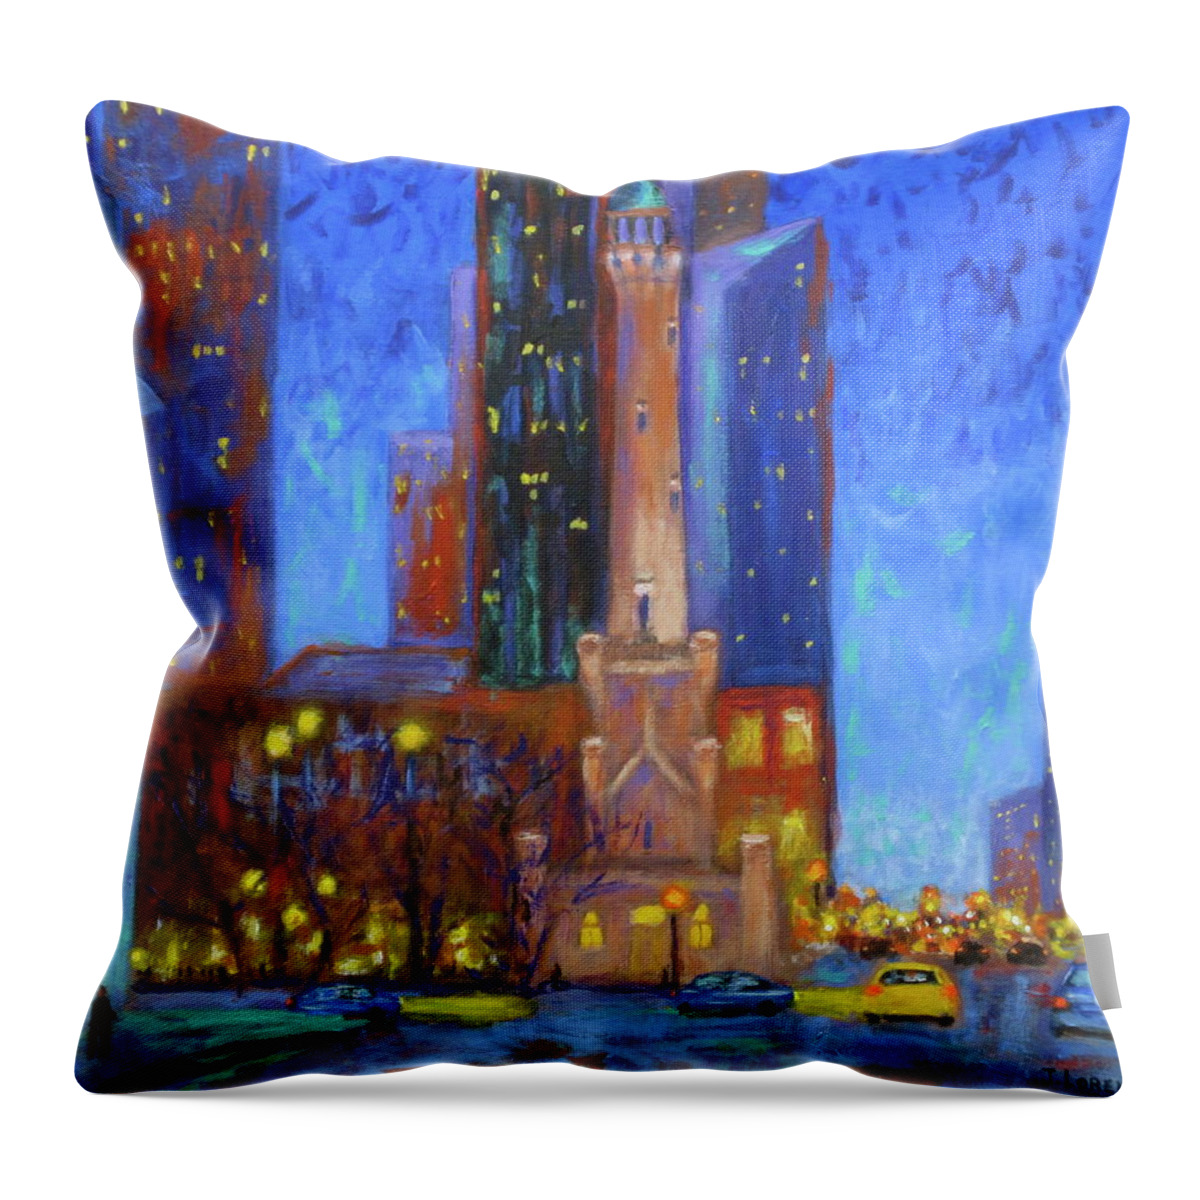 Chicago Water Tower Painting Throw Pillow featuring the painting Chicago Water Tower at Night by J Loren Reedy